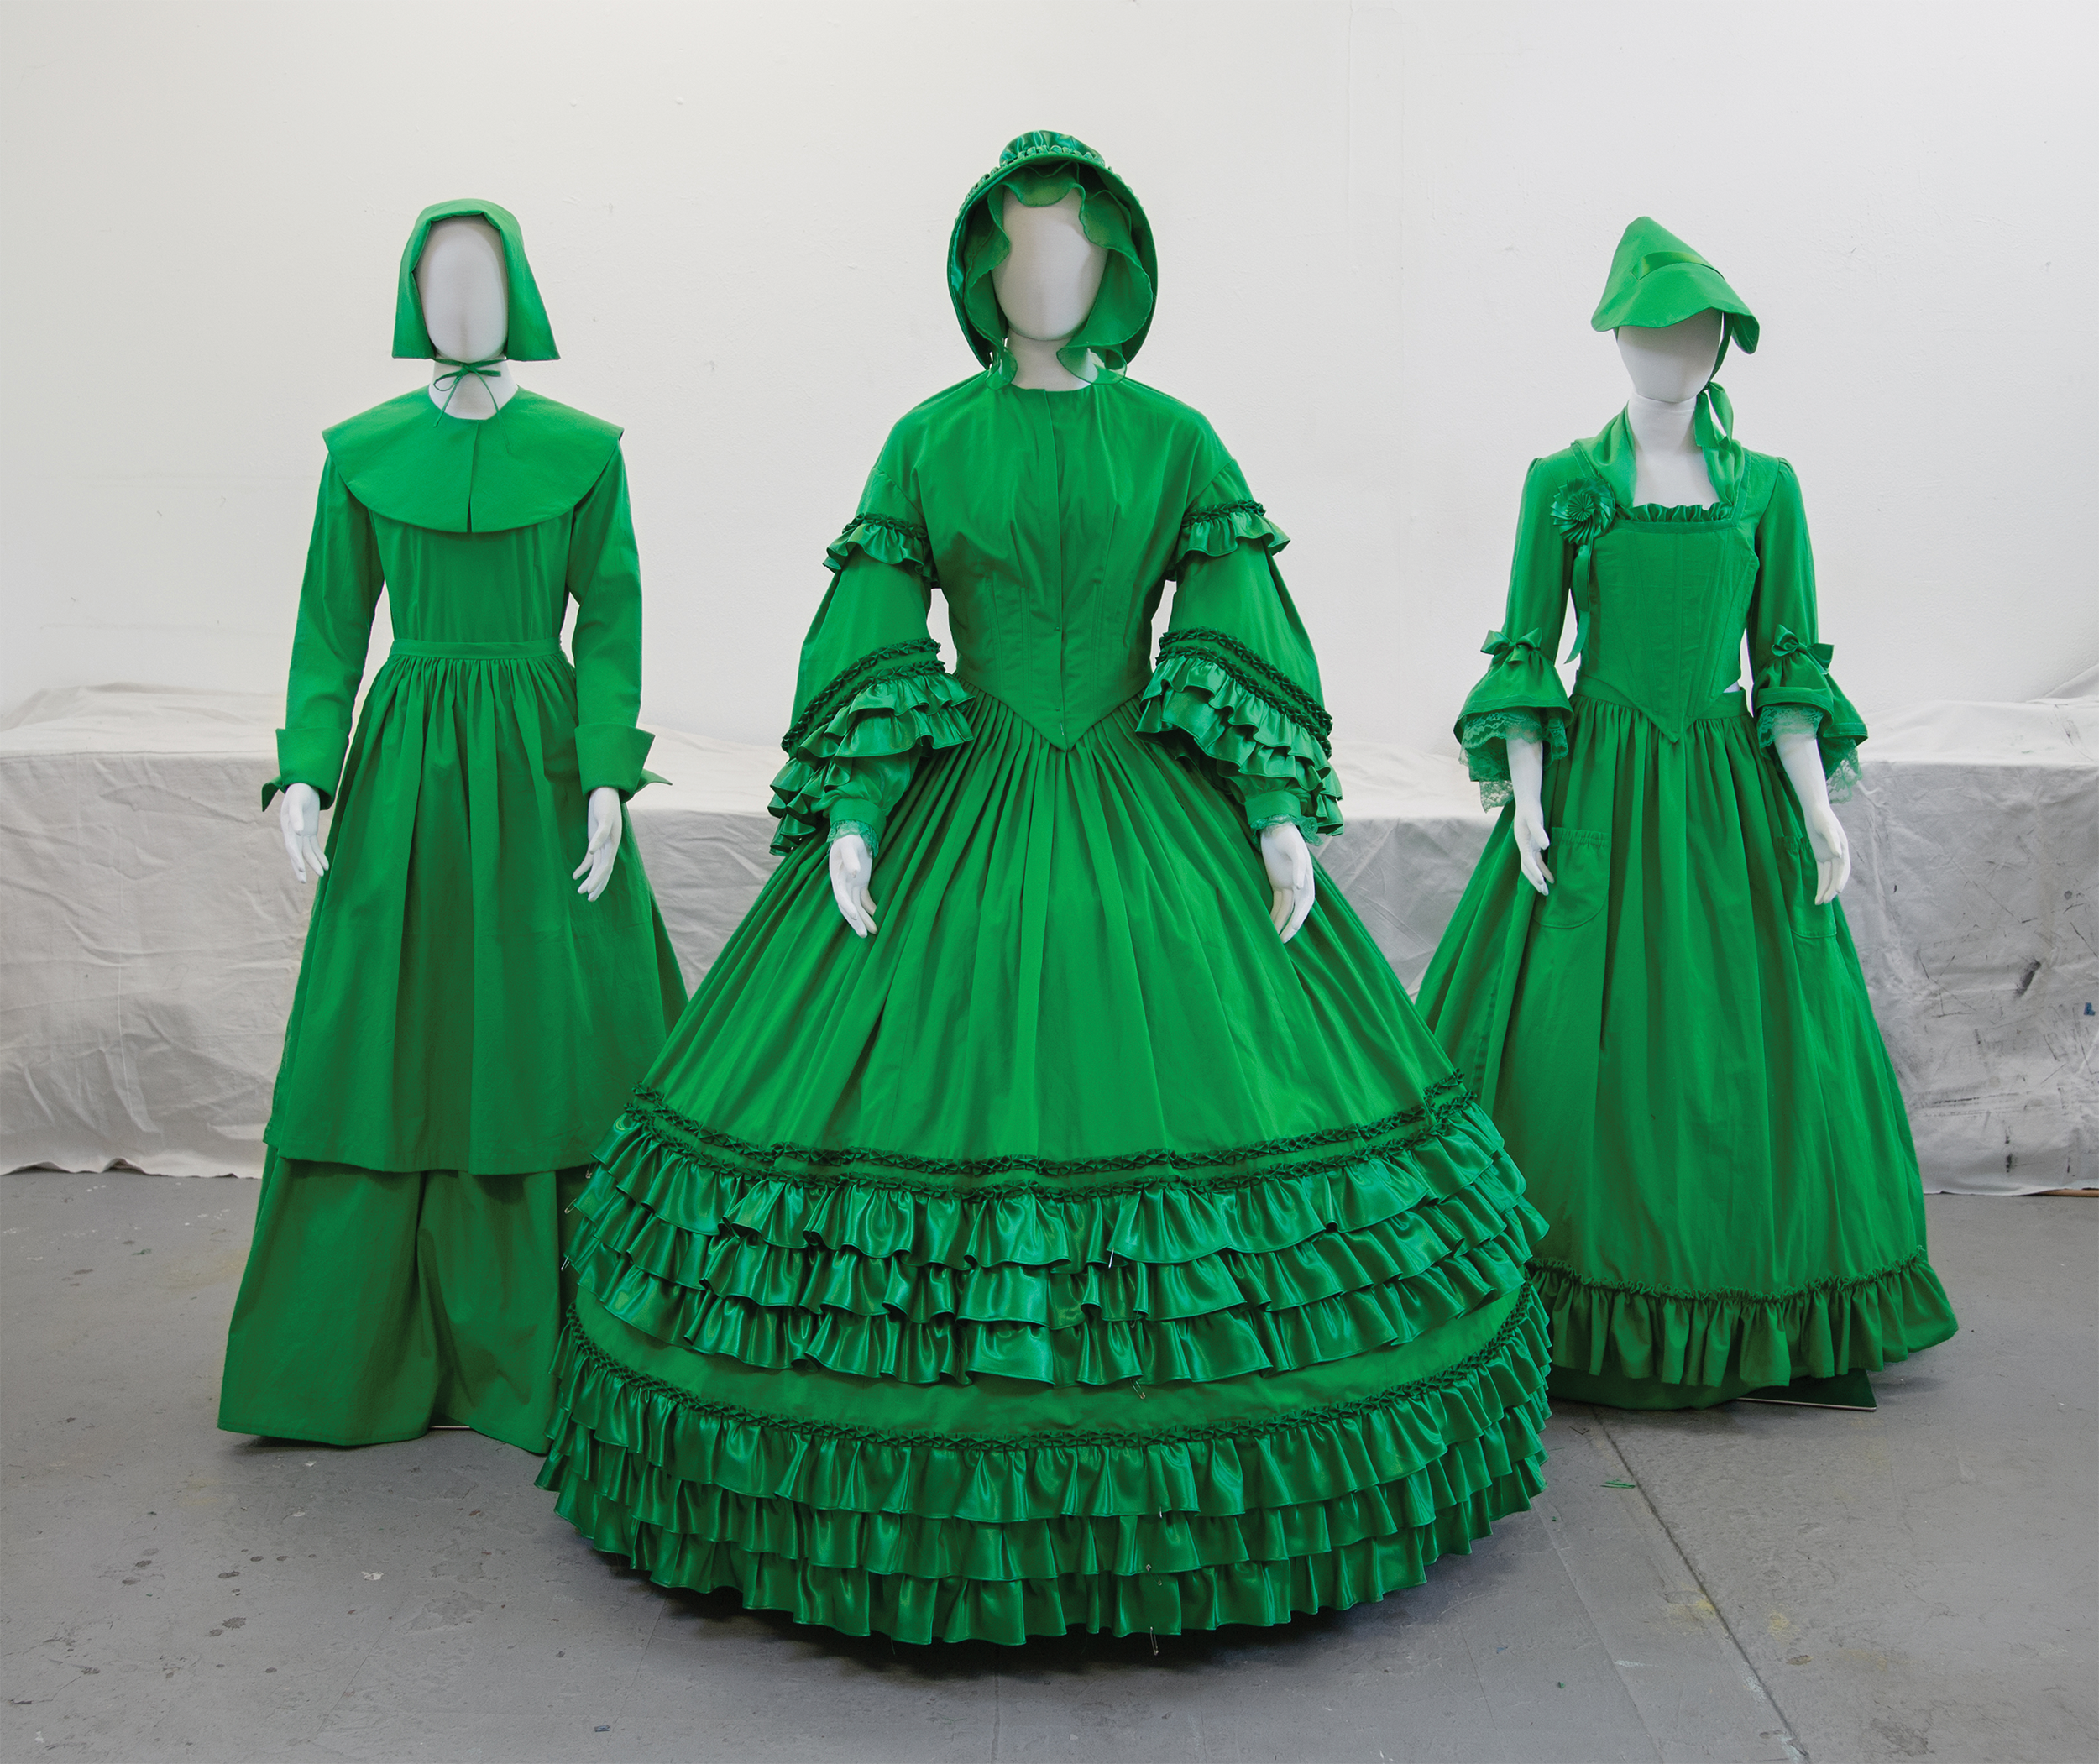 Photo of three chroma key green dresses representing the Pilgrim, American Revolution, and Civil War eras.